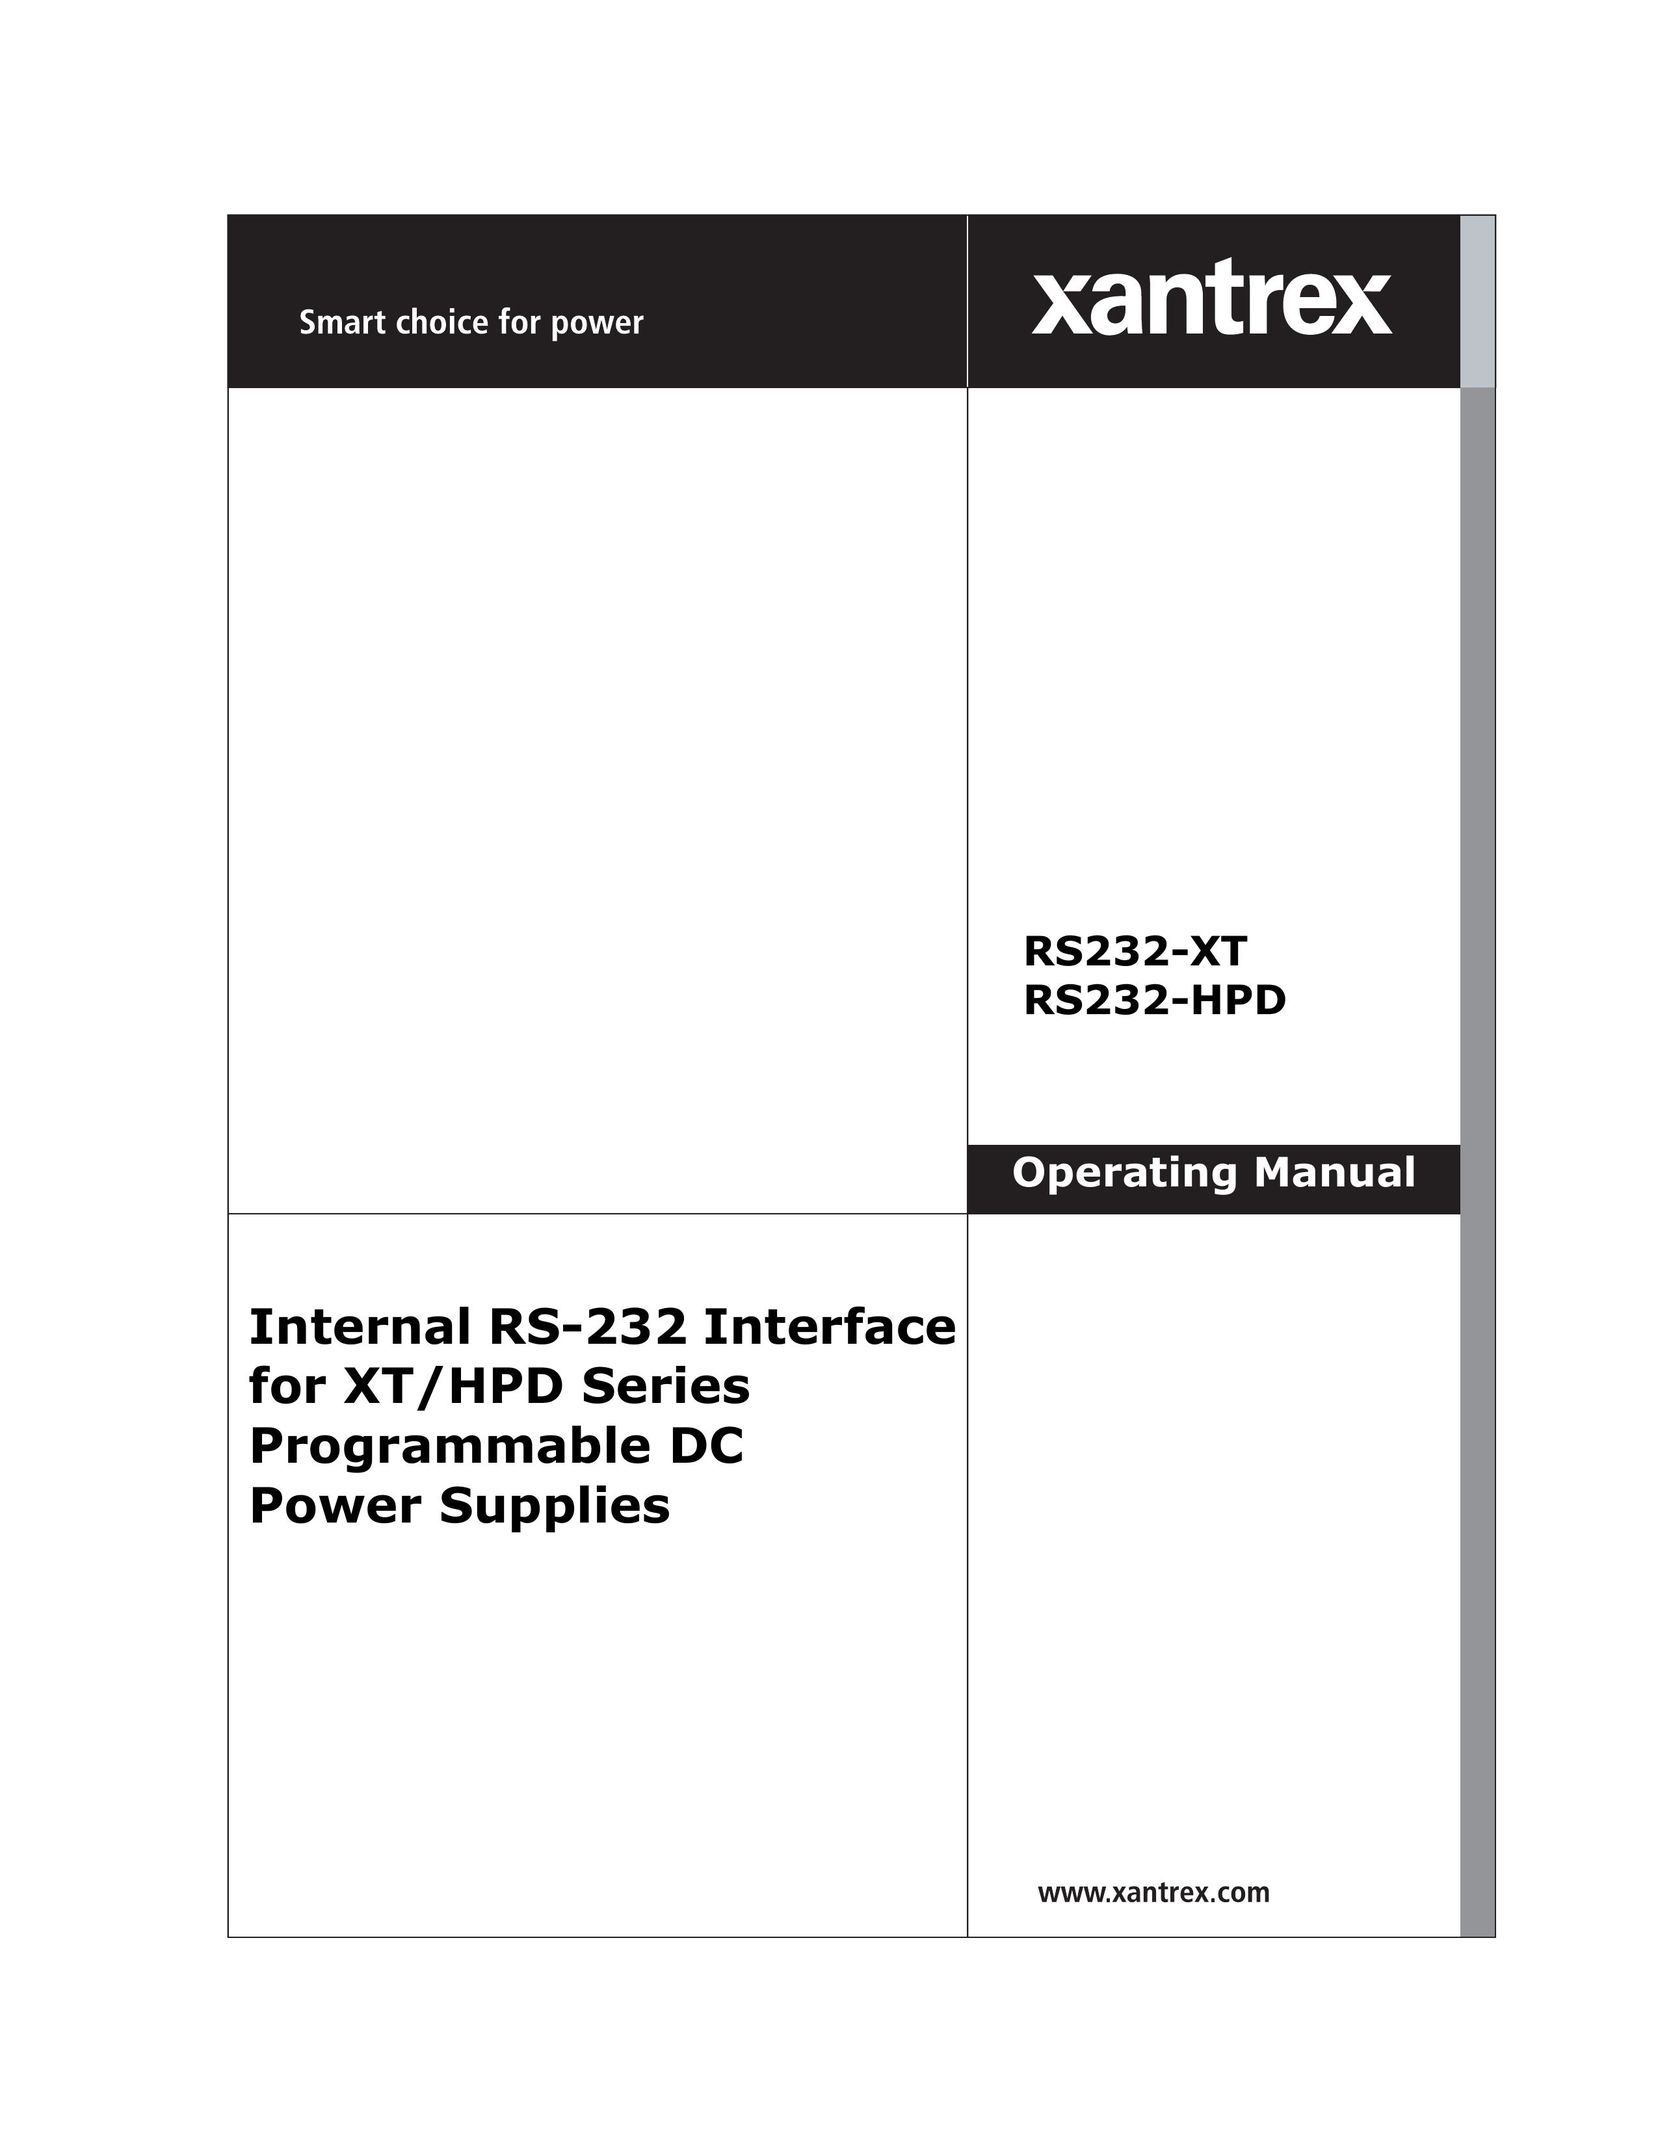 Xantrex Technology RS232-HPD Power Supply User Manual